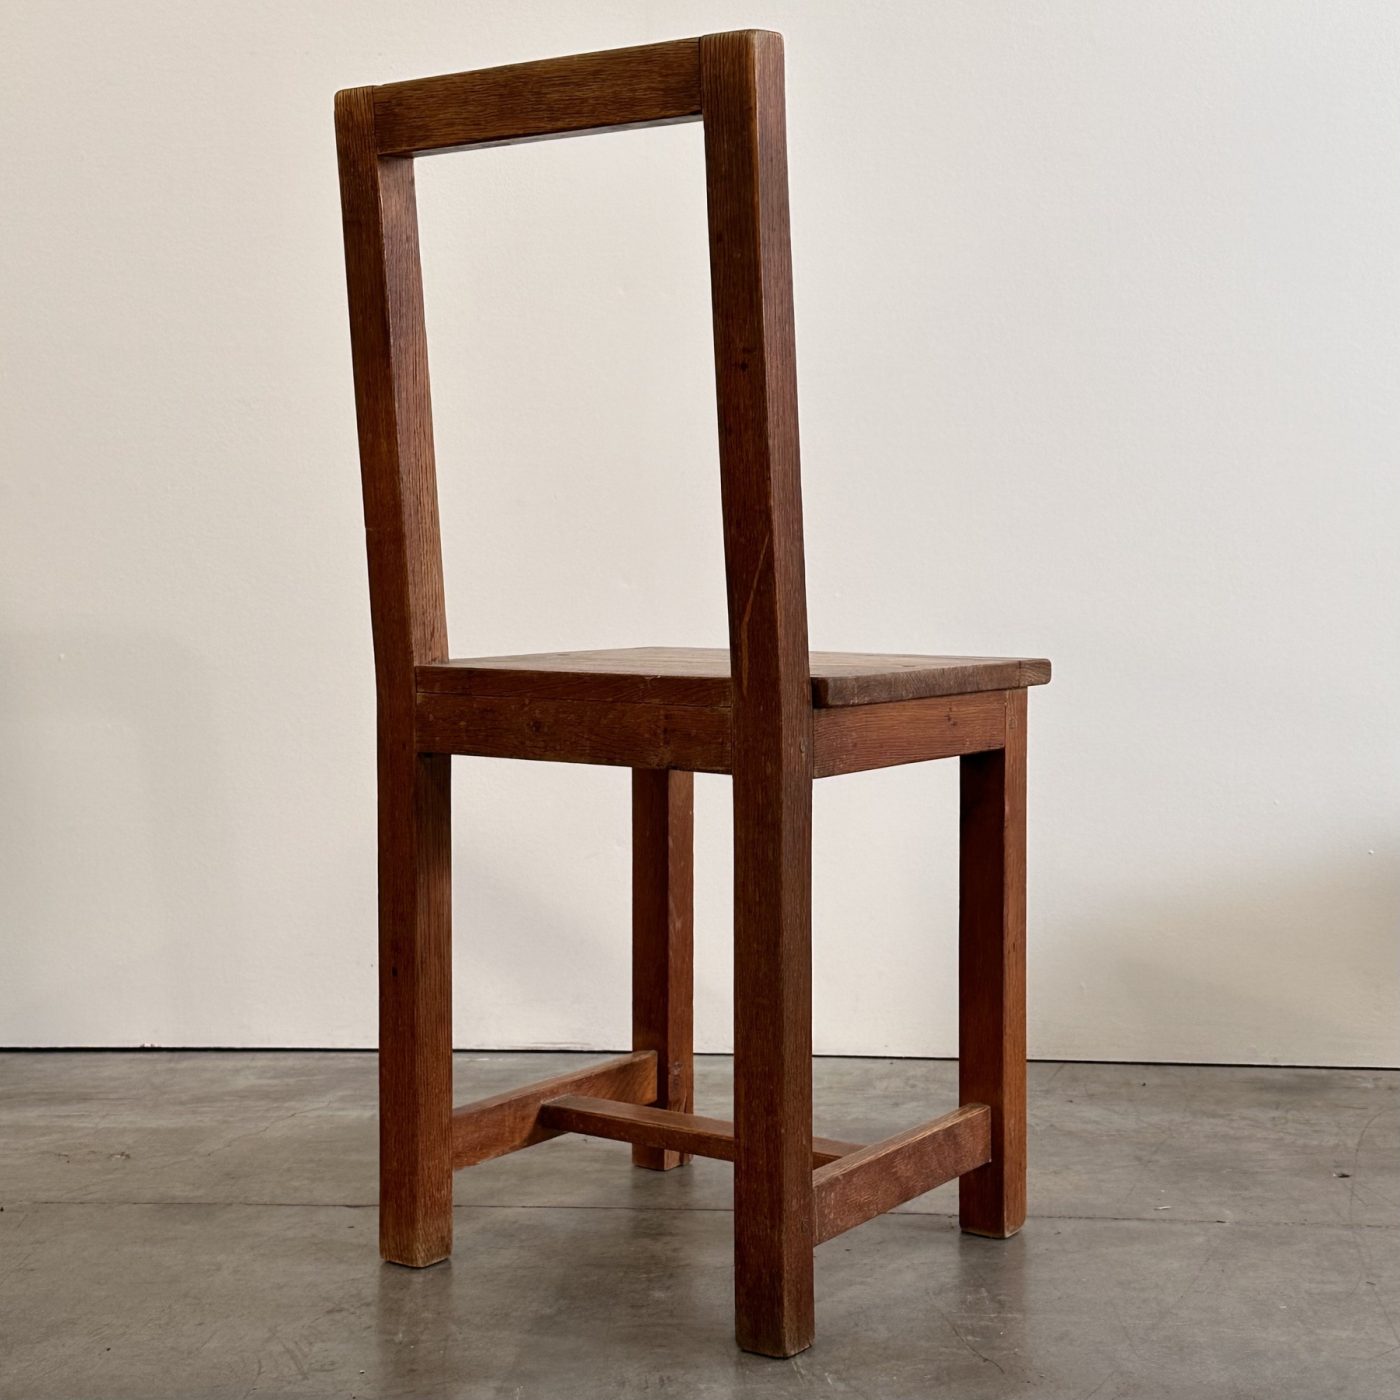 objet-vagabond-simple-chairs0001